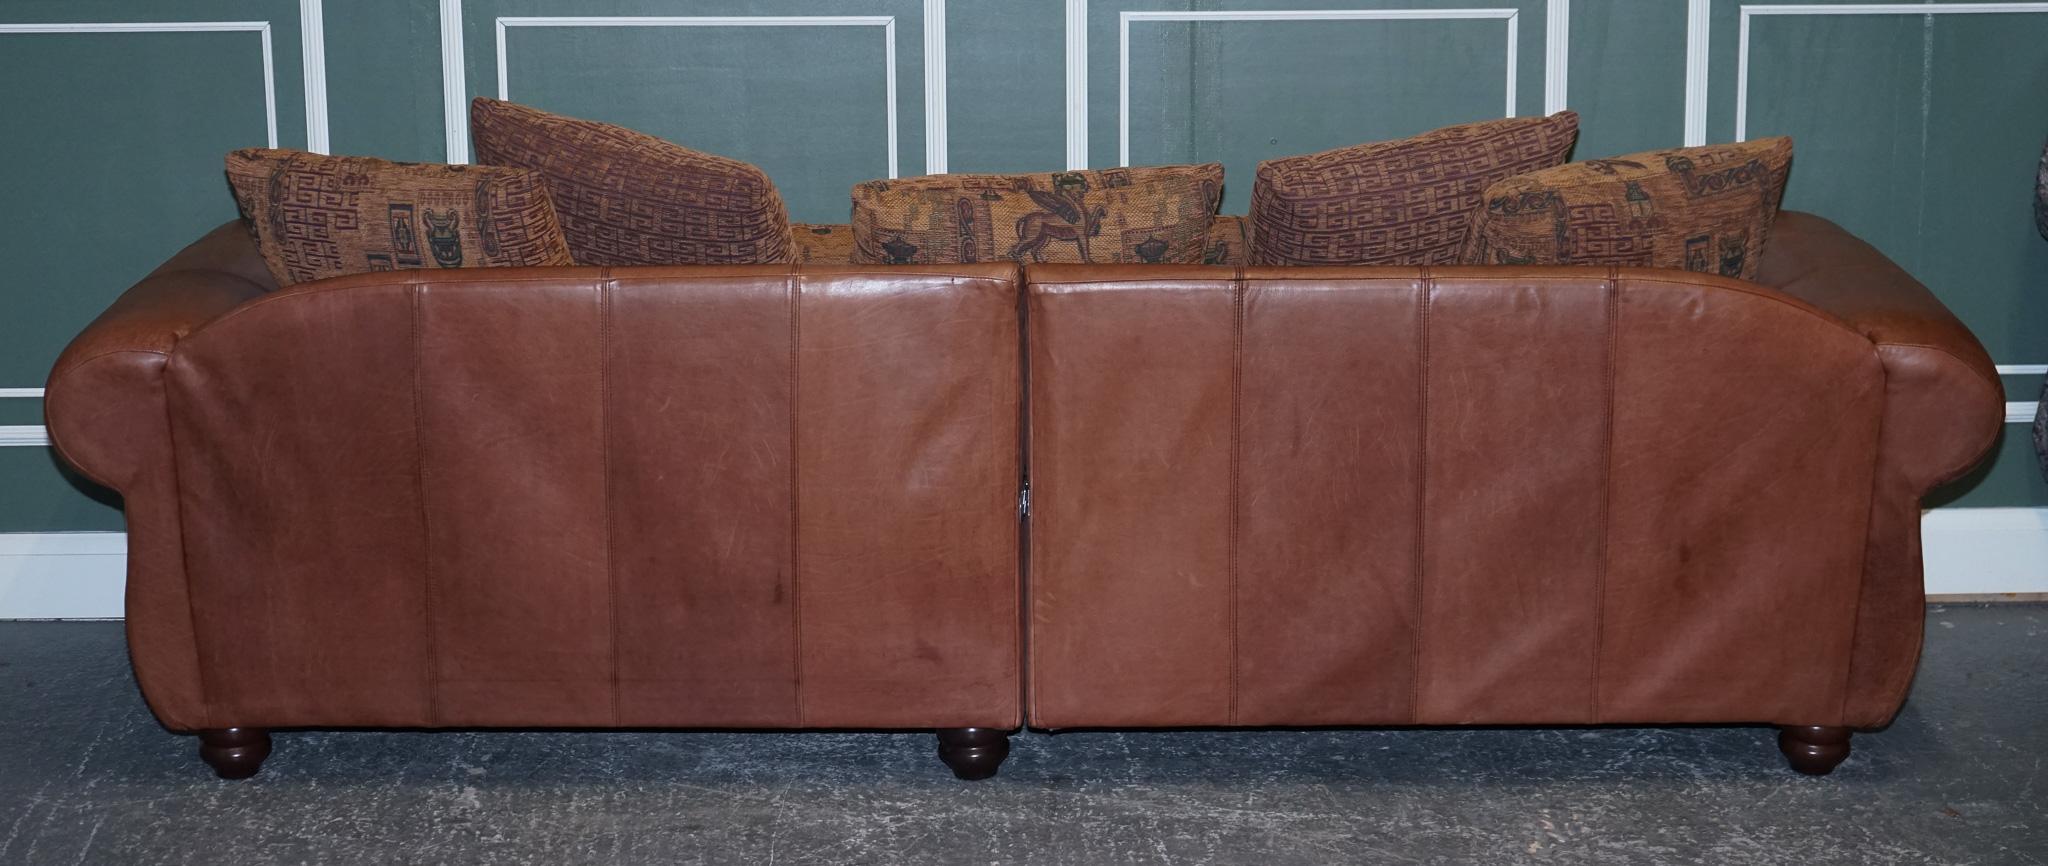 Stunning Thomas Lloyd Leather with Egyptian Pattern Fabric Grand Sofa 6